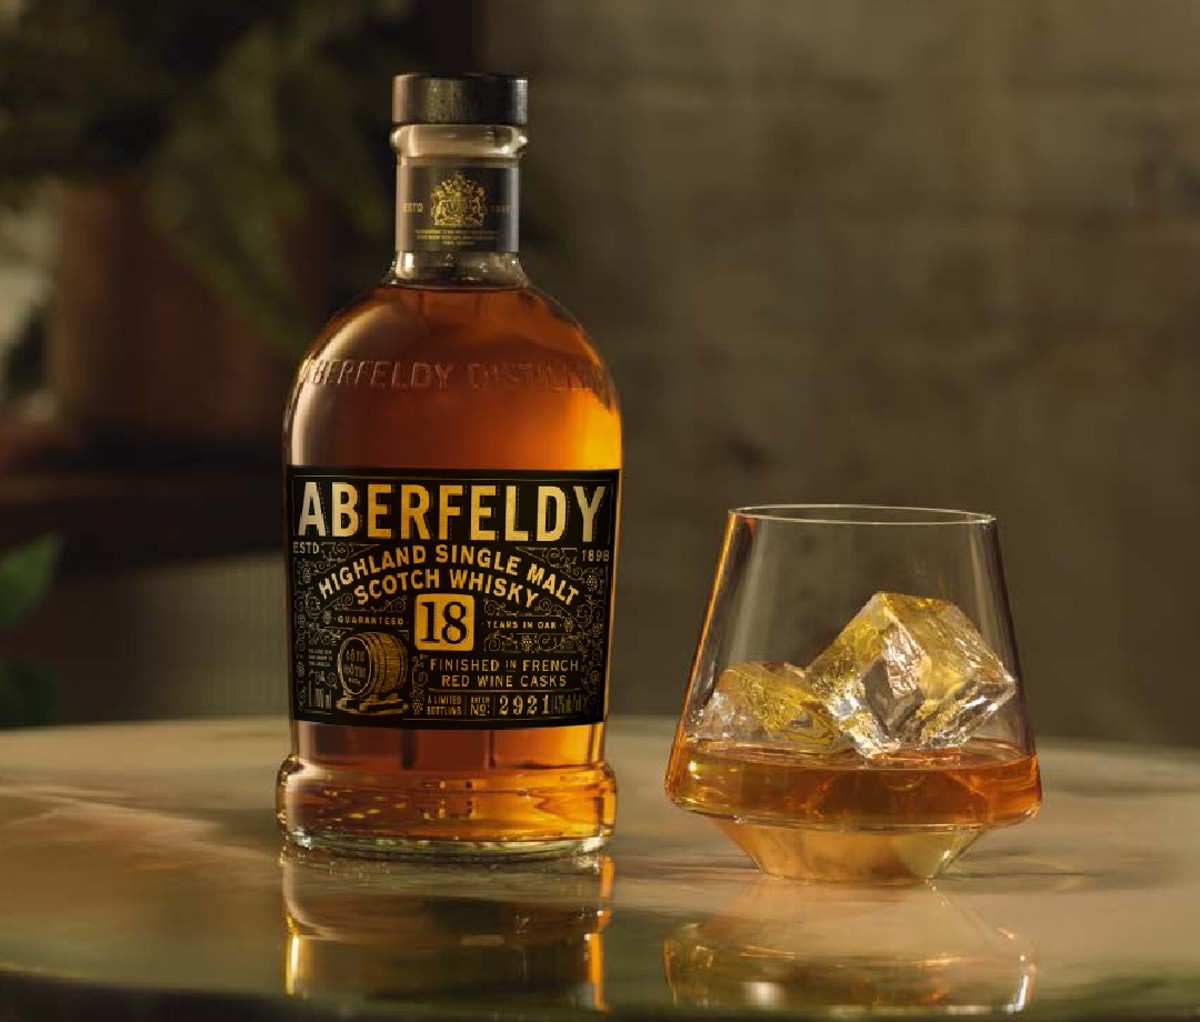 Bottle of Aberfeldy 18-Year-Old Red Wine Cask-Finished Single Malt Scotch Whisky beside filled glass